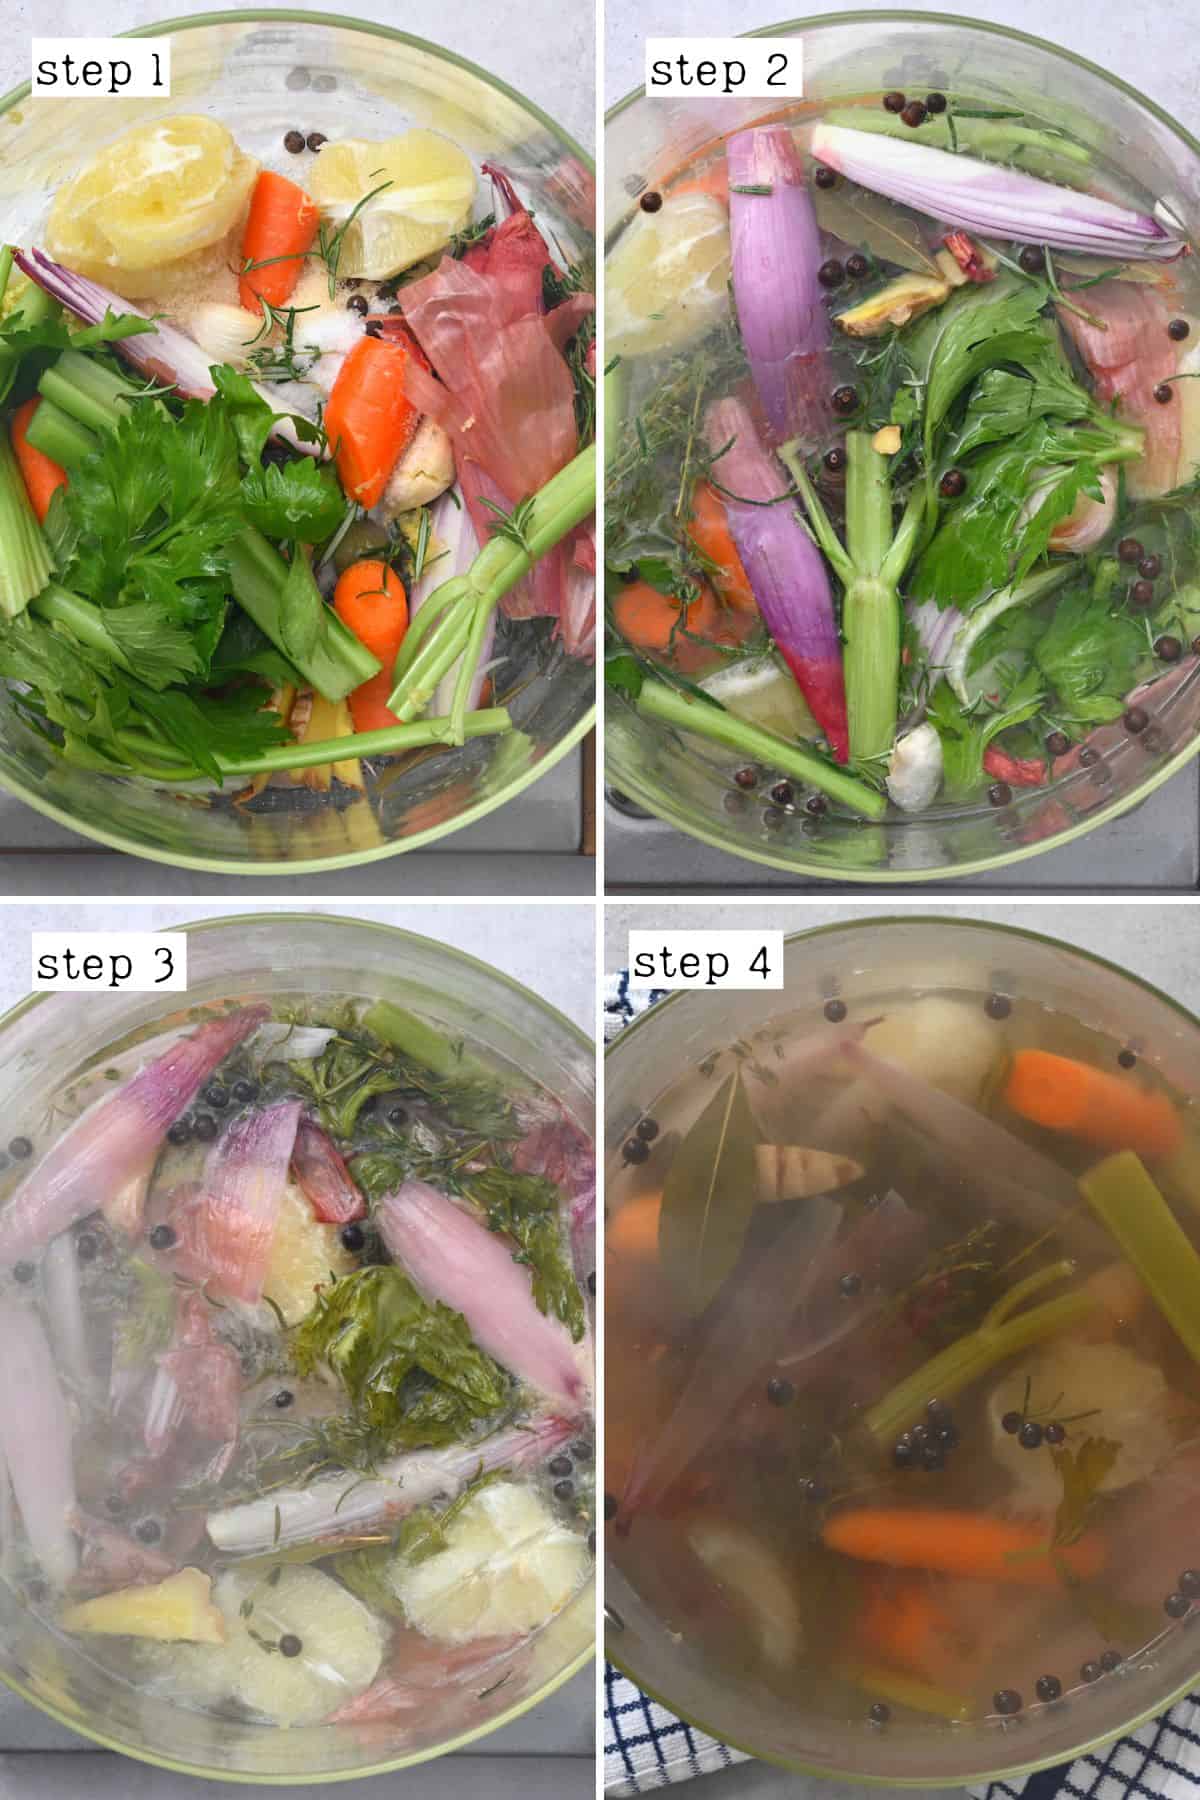 Steps for preparing brine with vegetables